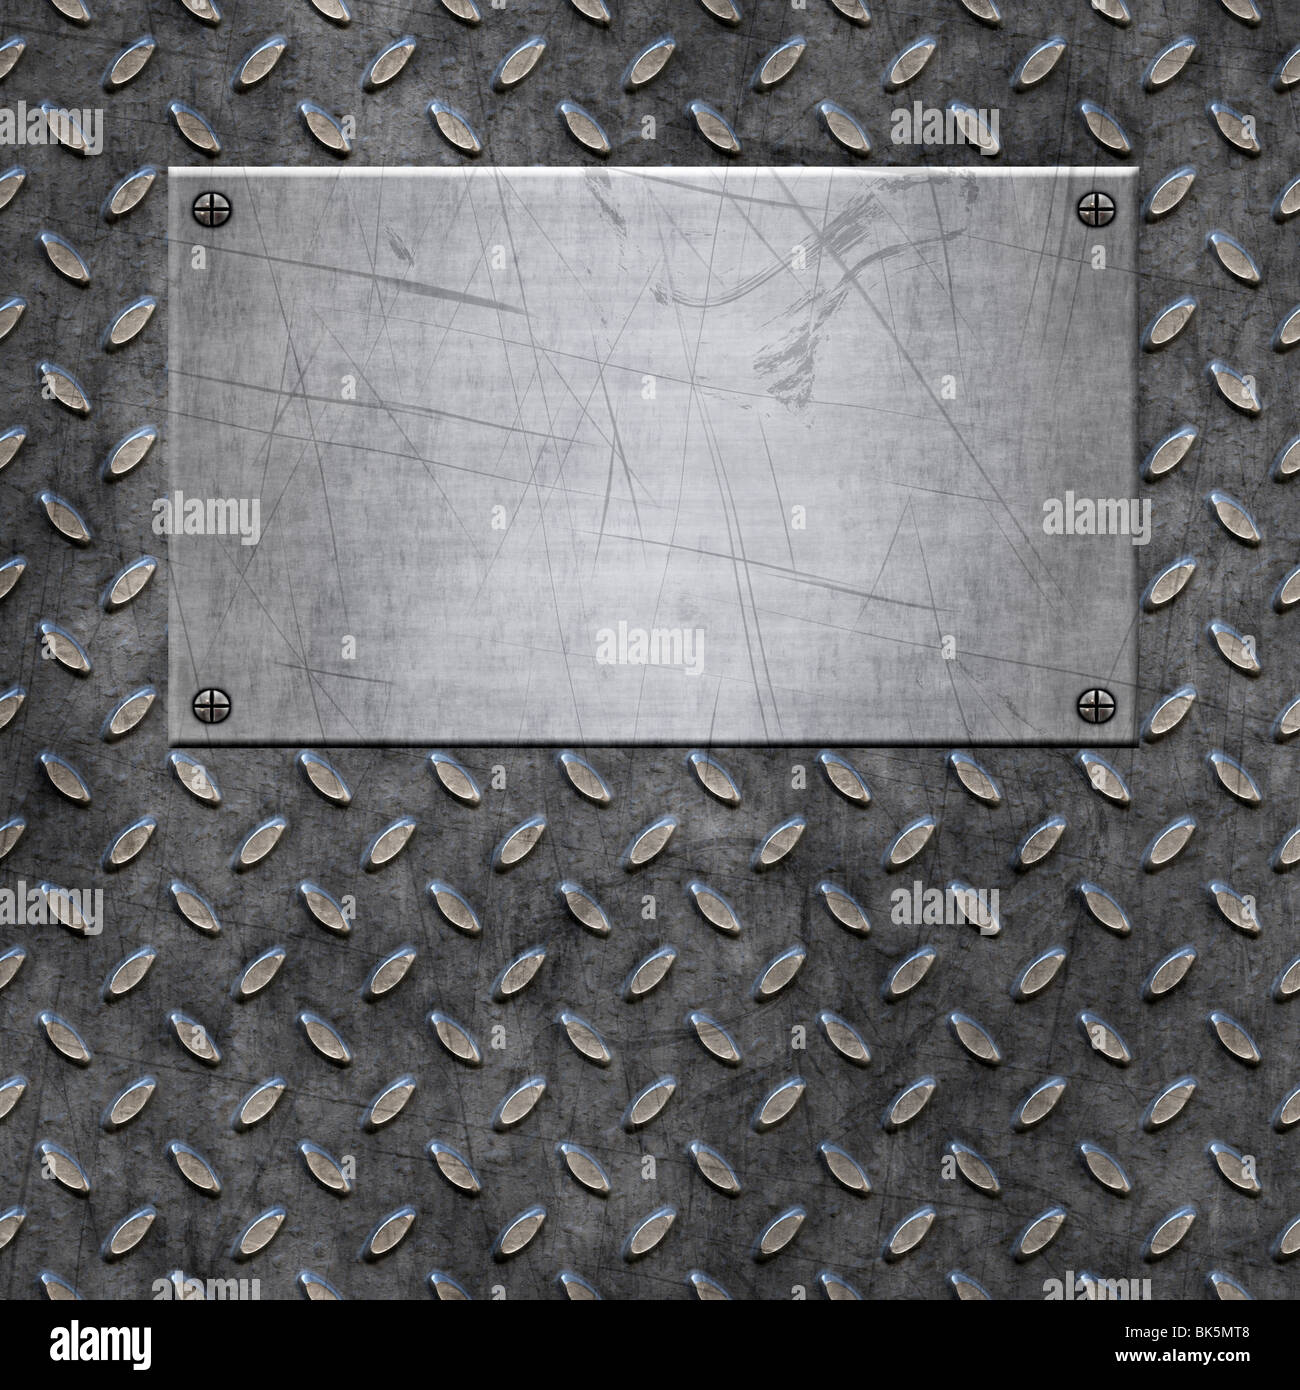 Diamond Metal Sheet Background Images – Browse 12,778 Stock Photos